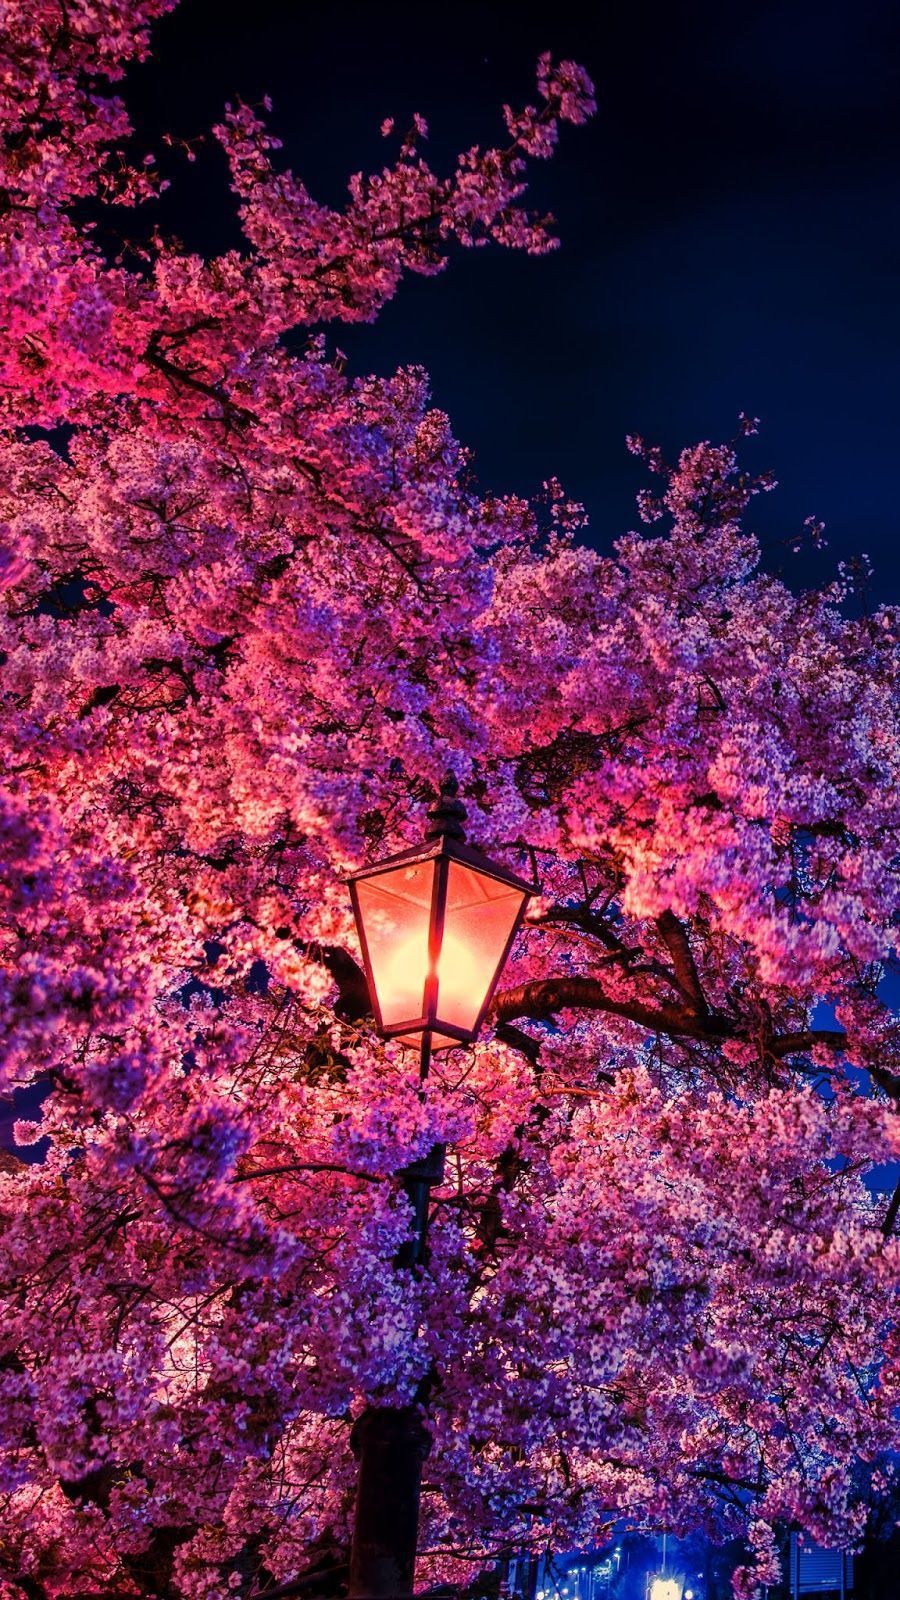 Cherry Blossom Wallpaper Images  Free Download on Freepik